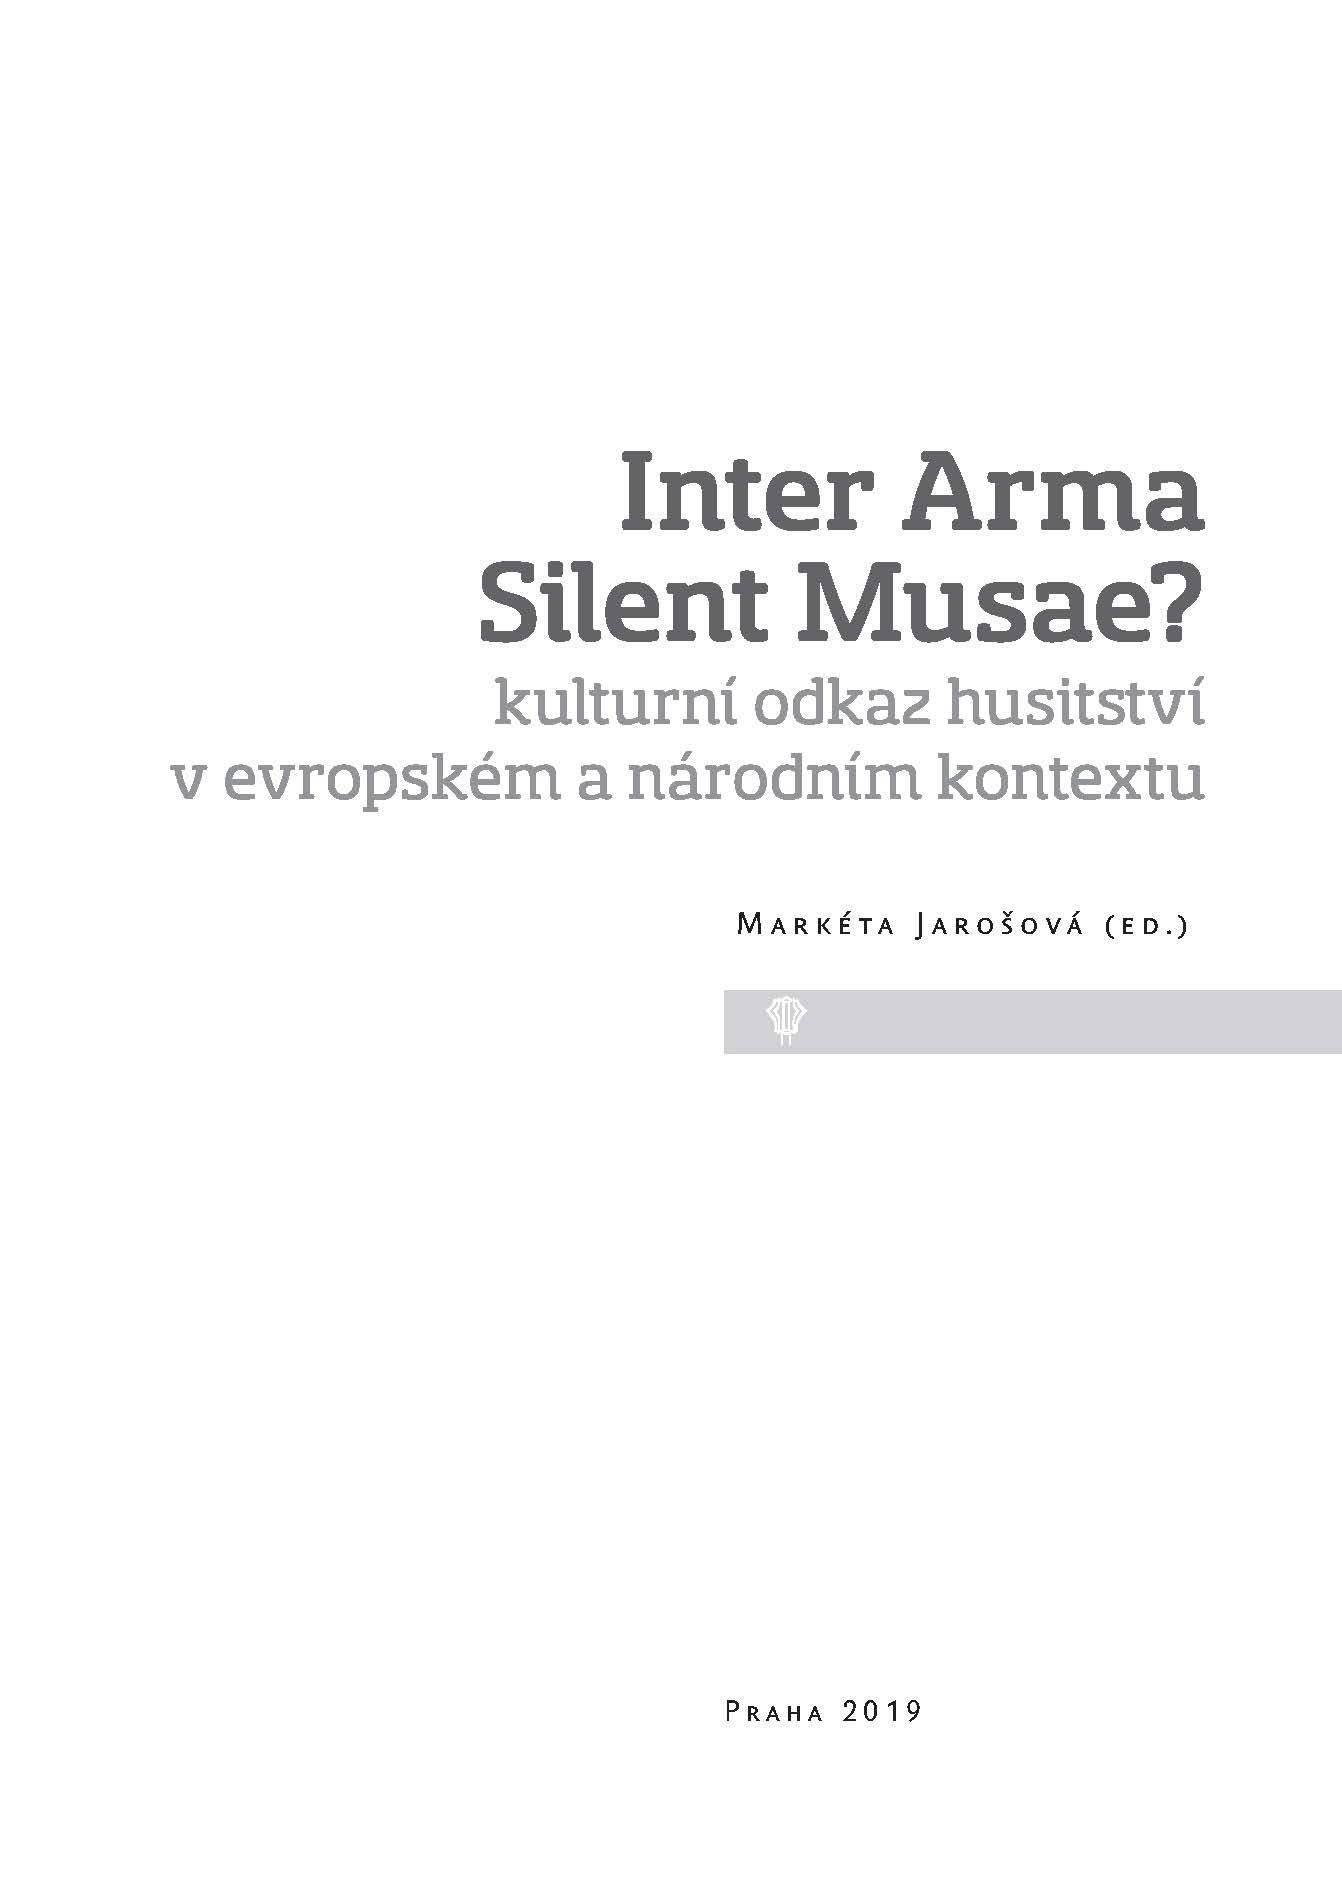 Inter Arma Silent Musae? ukázka-1